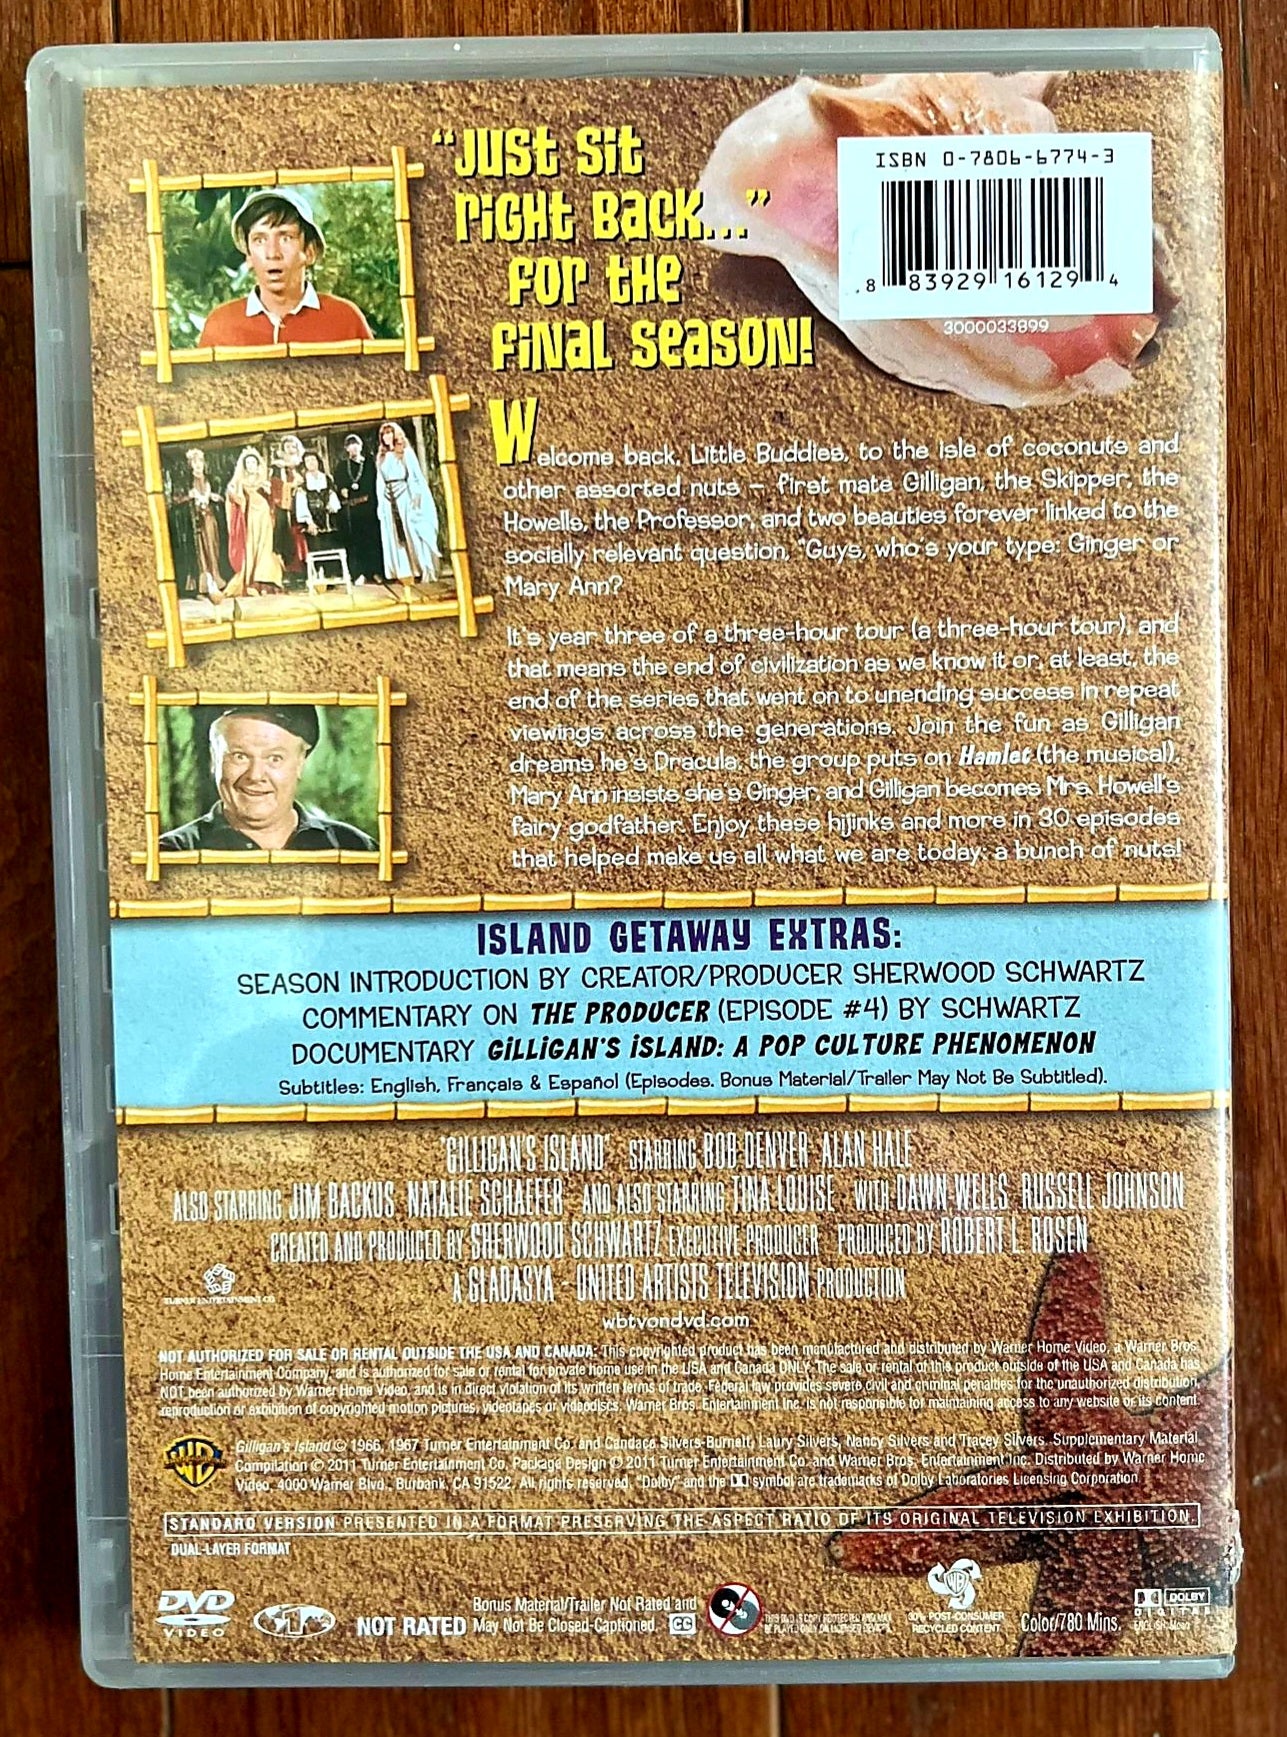 "GILLIGAN'S ISLAND" *The Complete 3rd Season on DVD